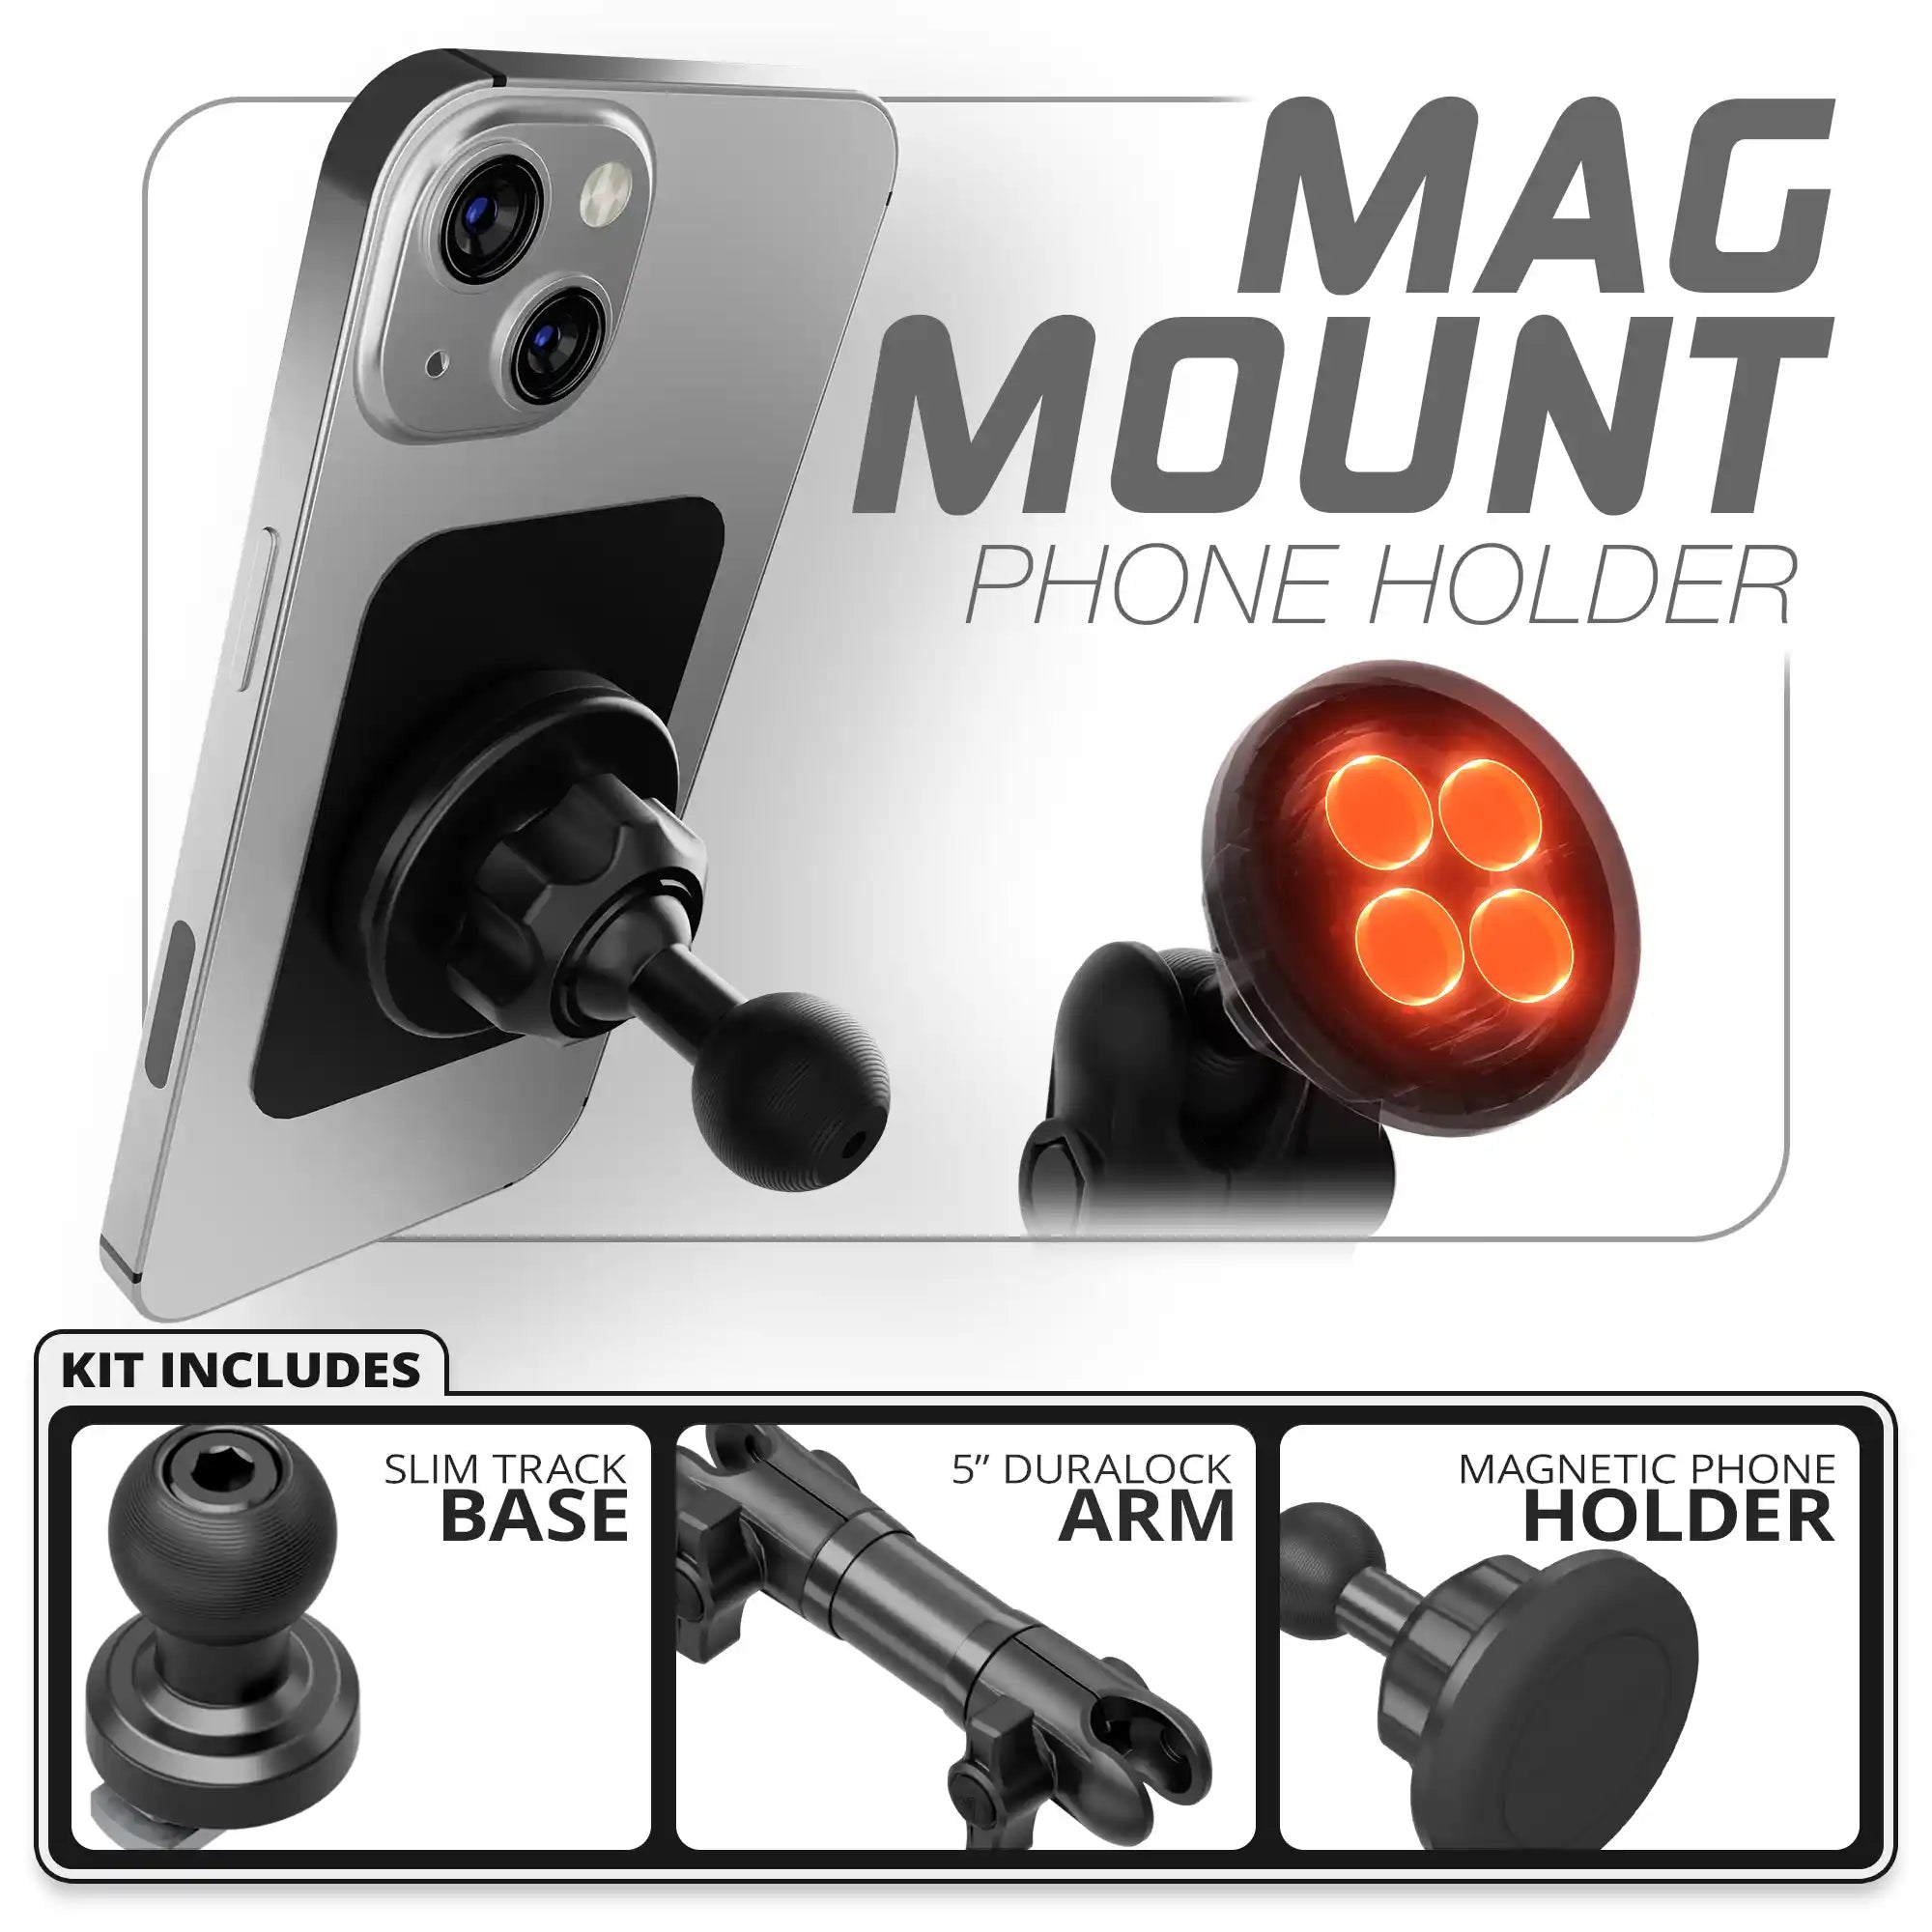 Magnetic Phone Holder | Slim Track Base | 5" DuraLock Arm